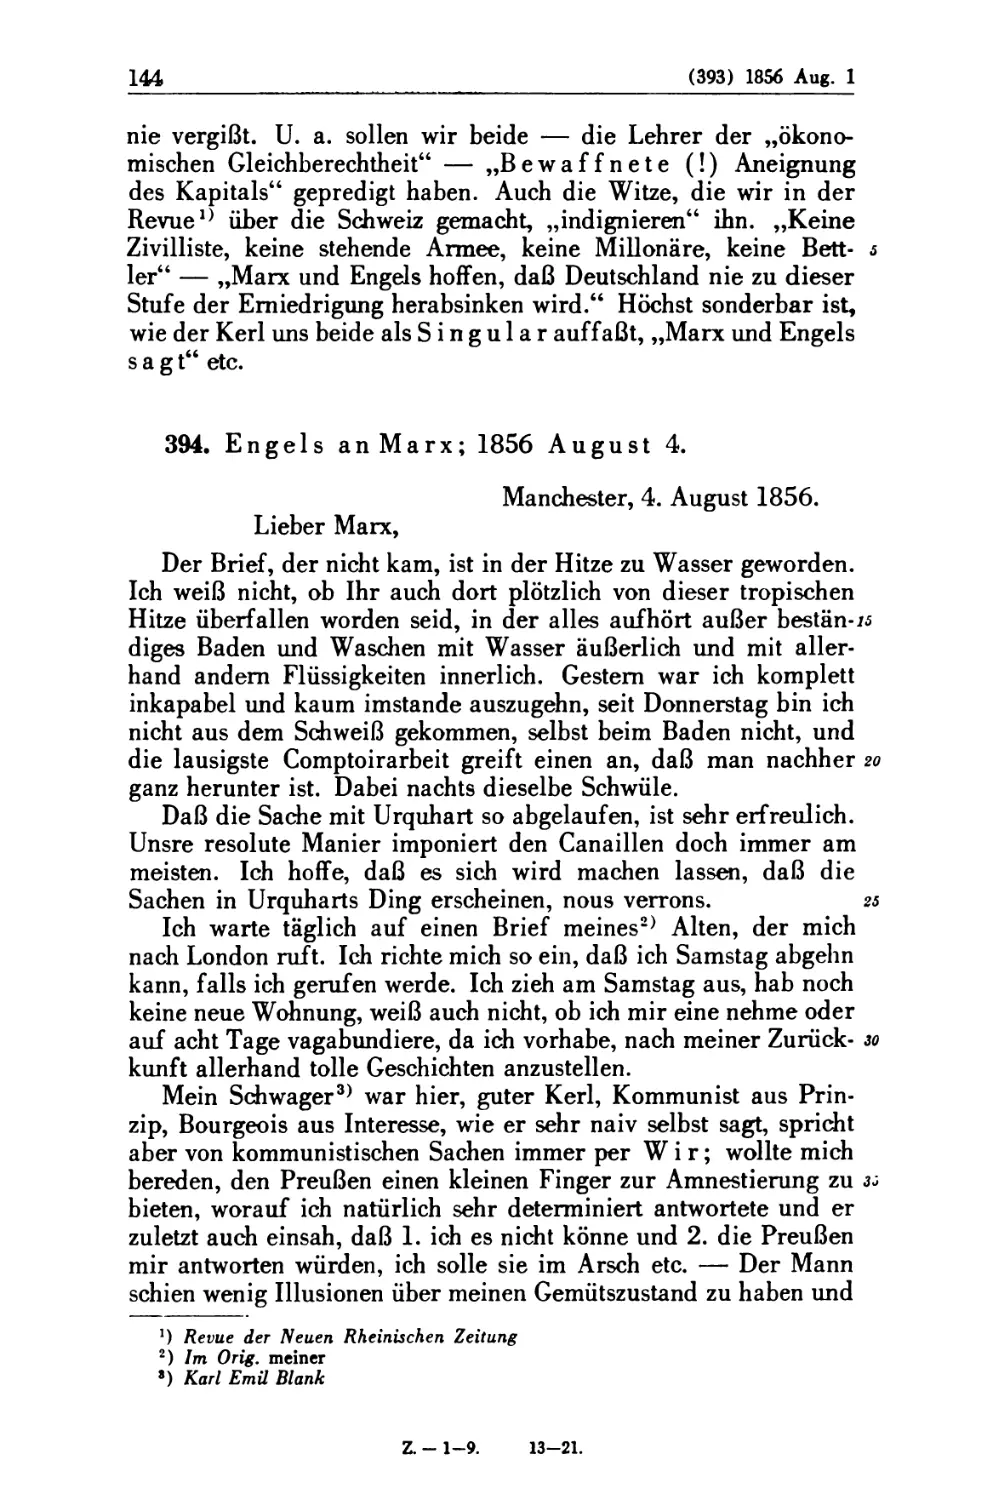 394. Engels an Marx; 1856 August 4